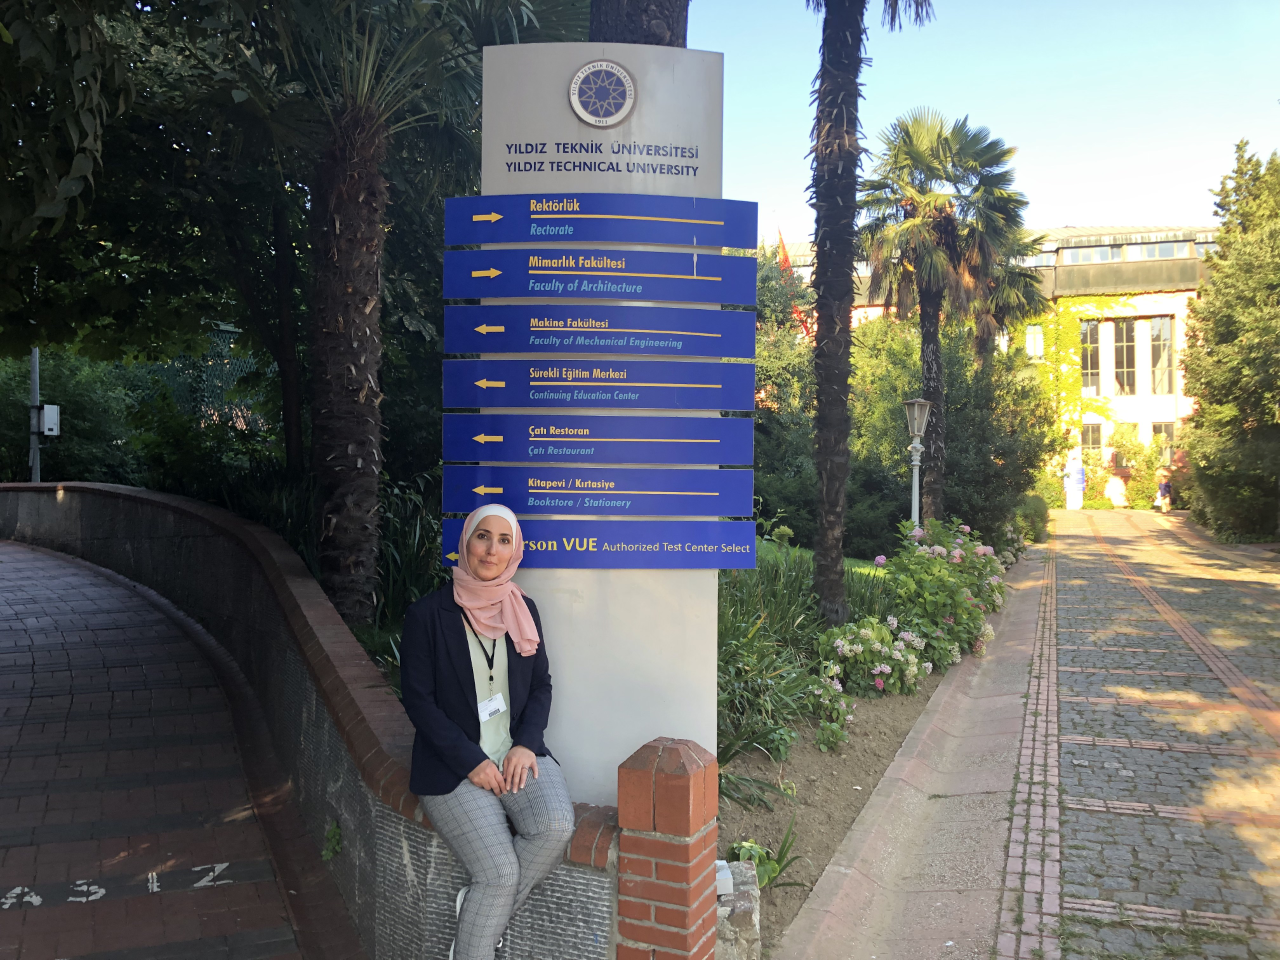 Shirin Alhroob at Yildiz Technical University. Image by Nageen Asif. Turkey, 2019.